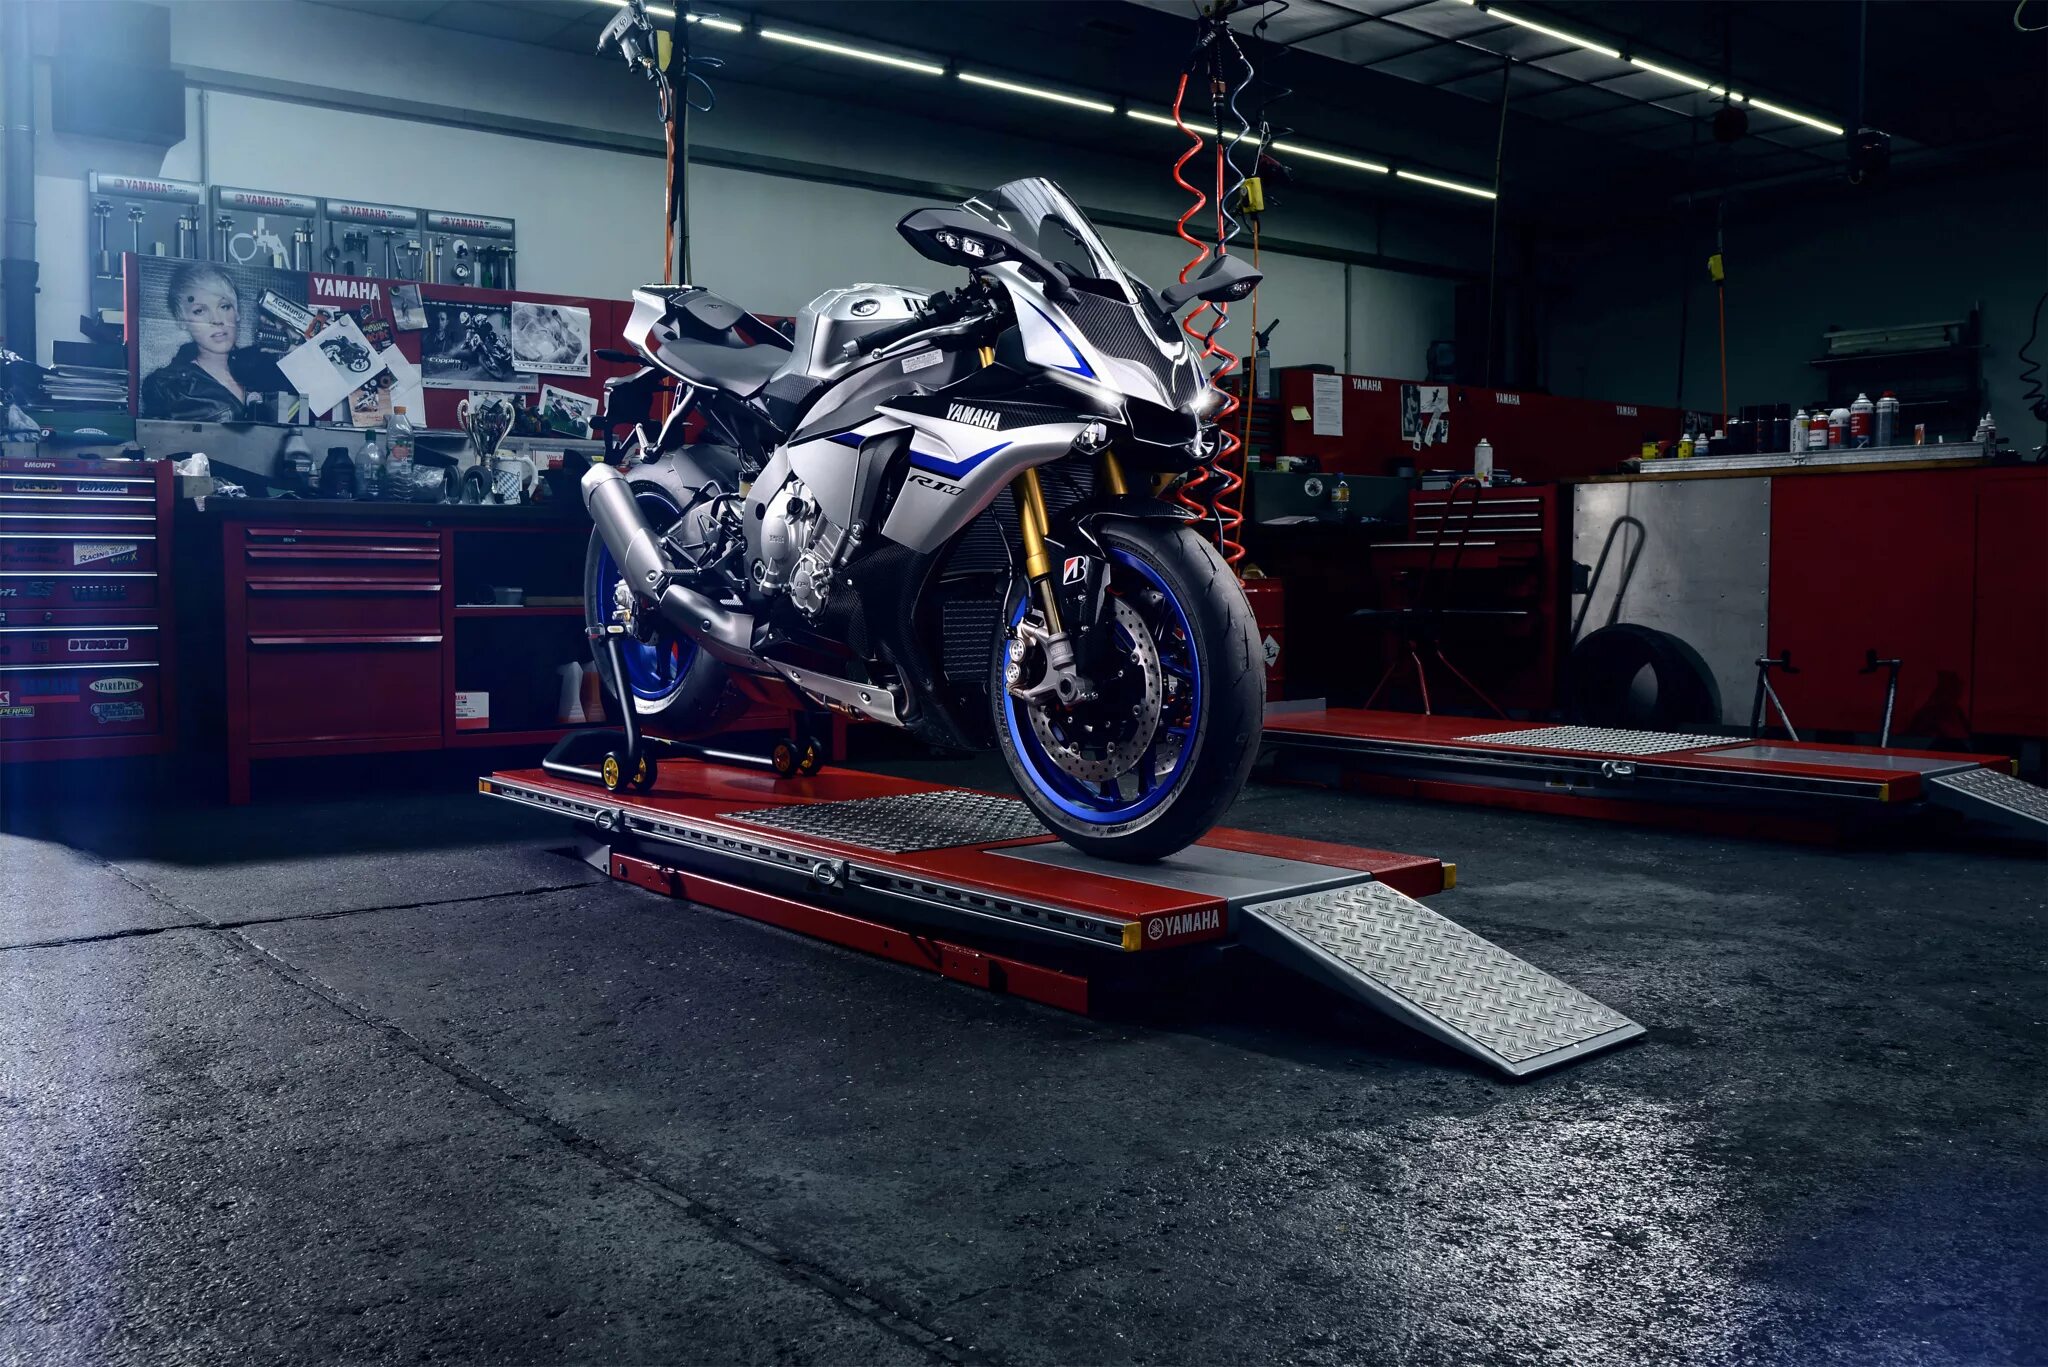 Ремонтная мотоциклов. Yamaha r1 2018. Ямаха r1 в гараже. Yamaha Мотосервис. Мотоцикл Ямаха в гараже.